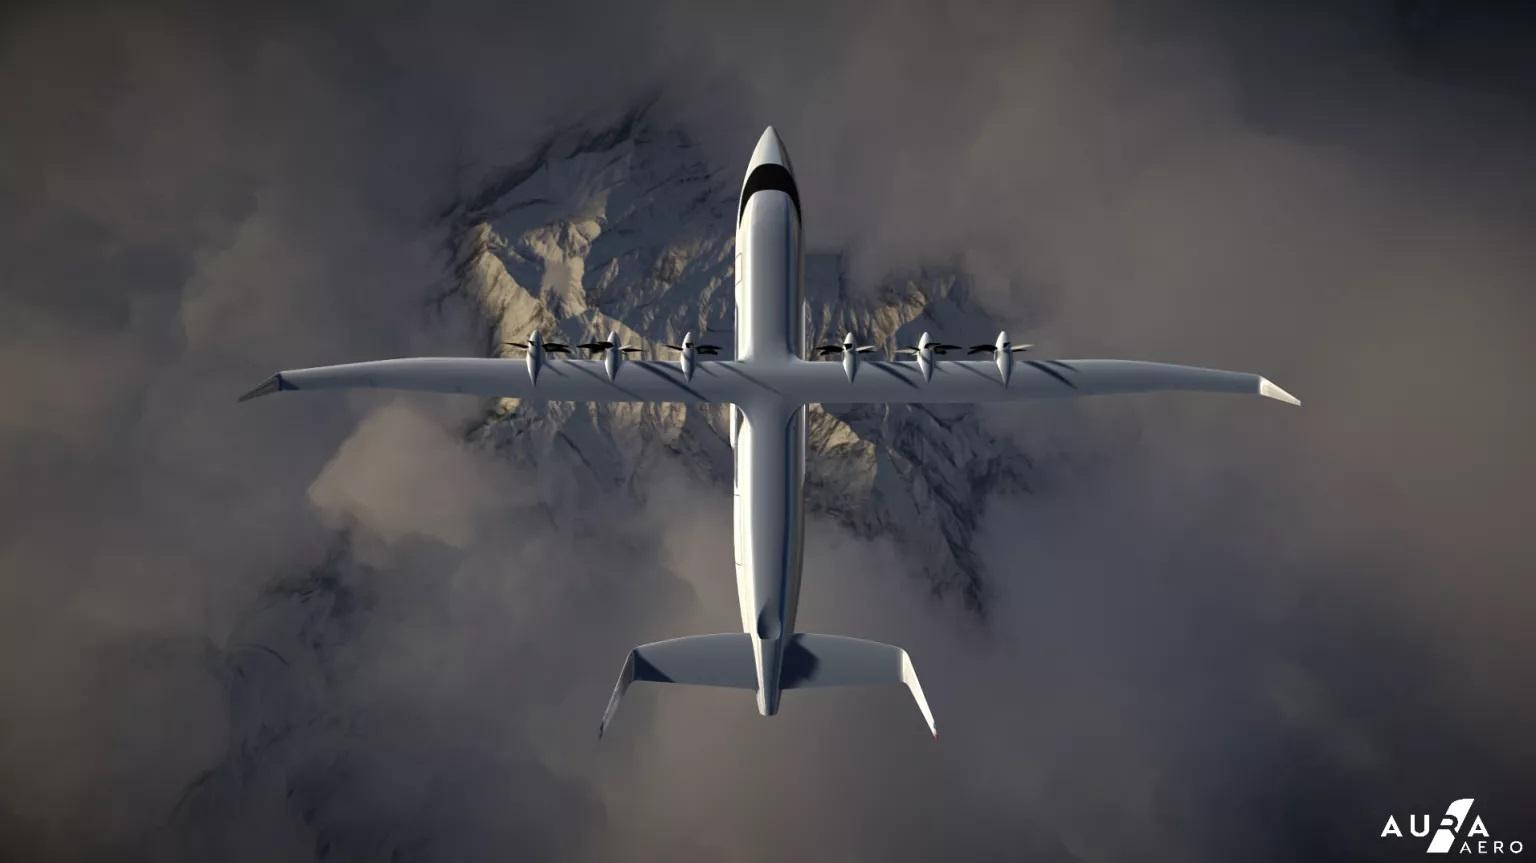 A rendered image of an Aura Aero ERA eVTOL aircraft viewed from above.